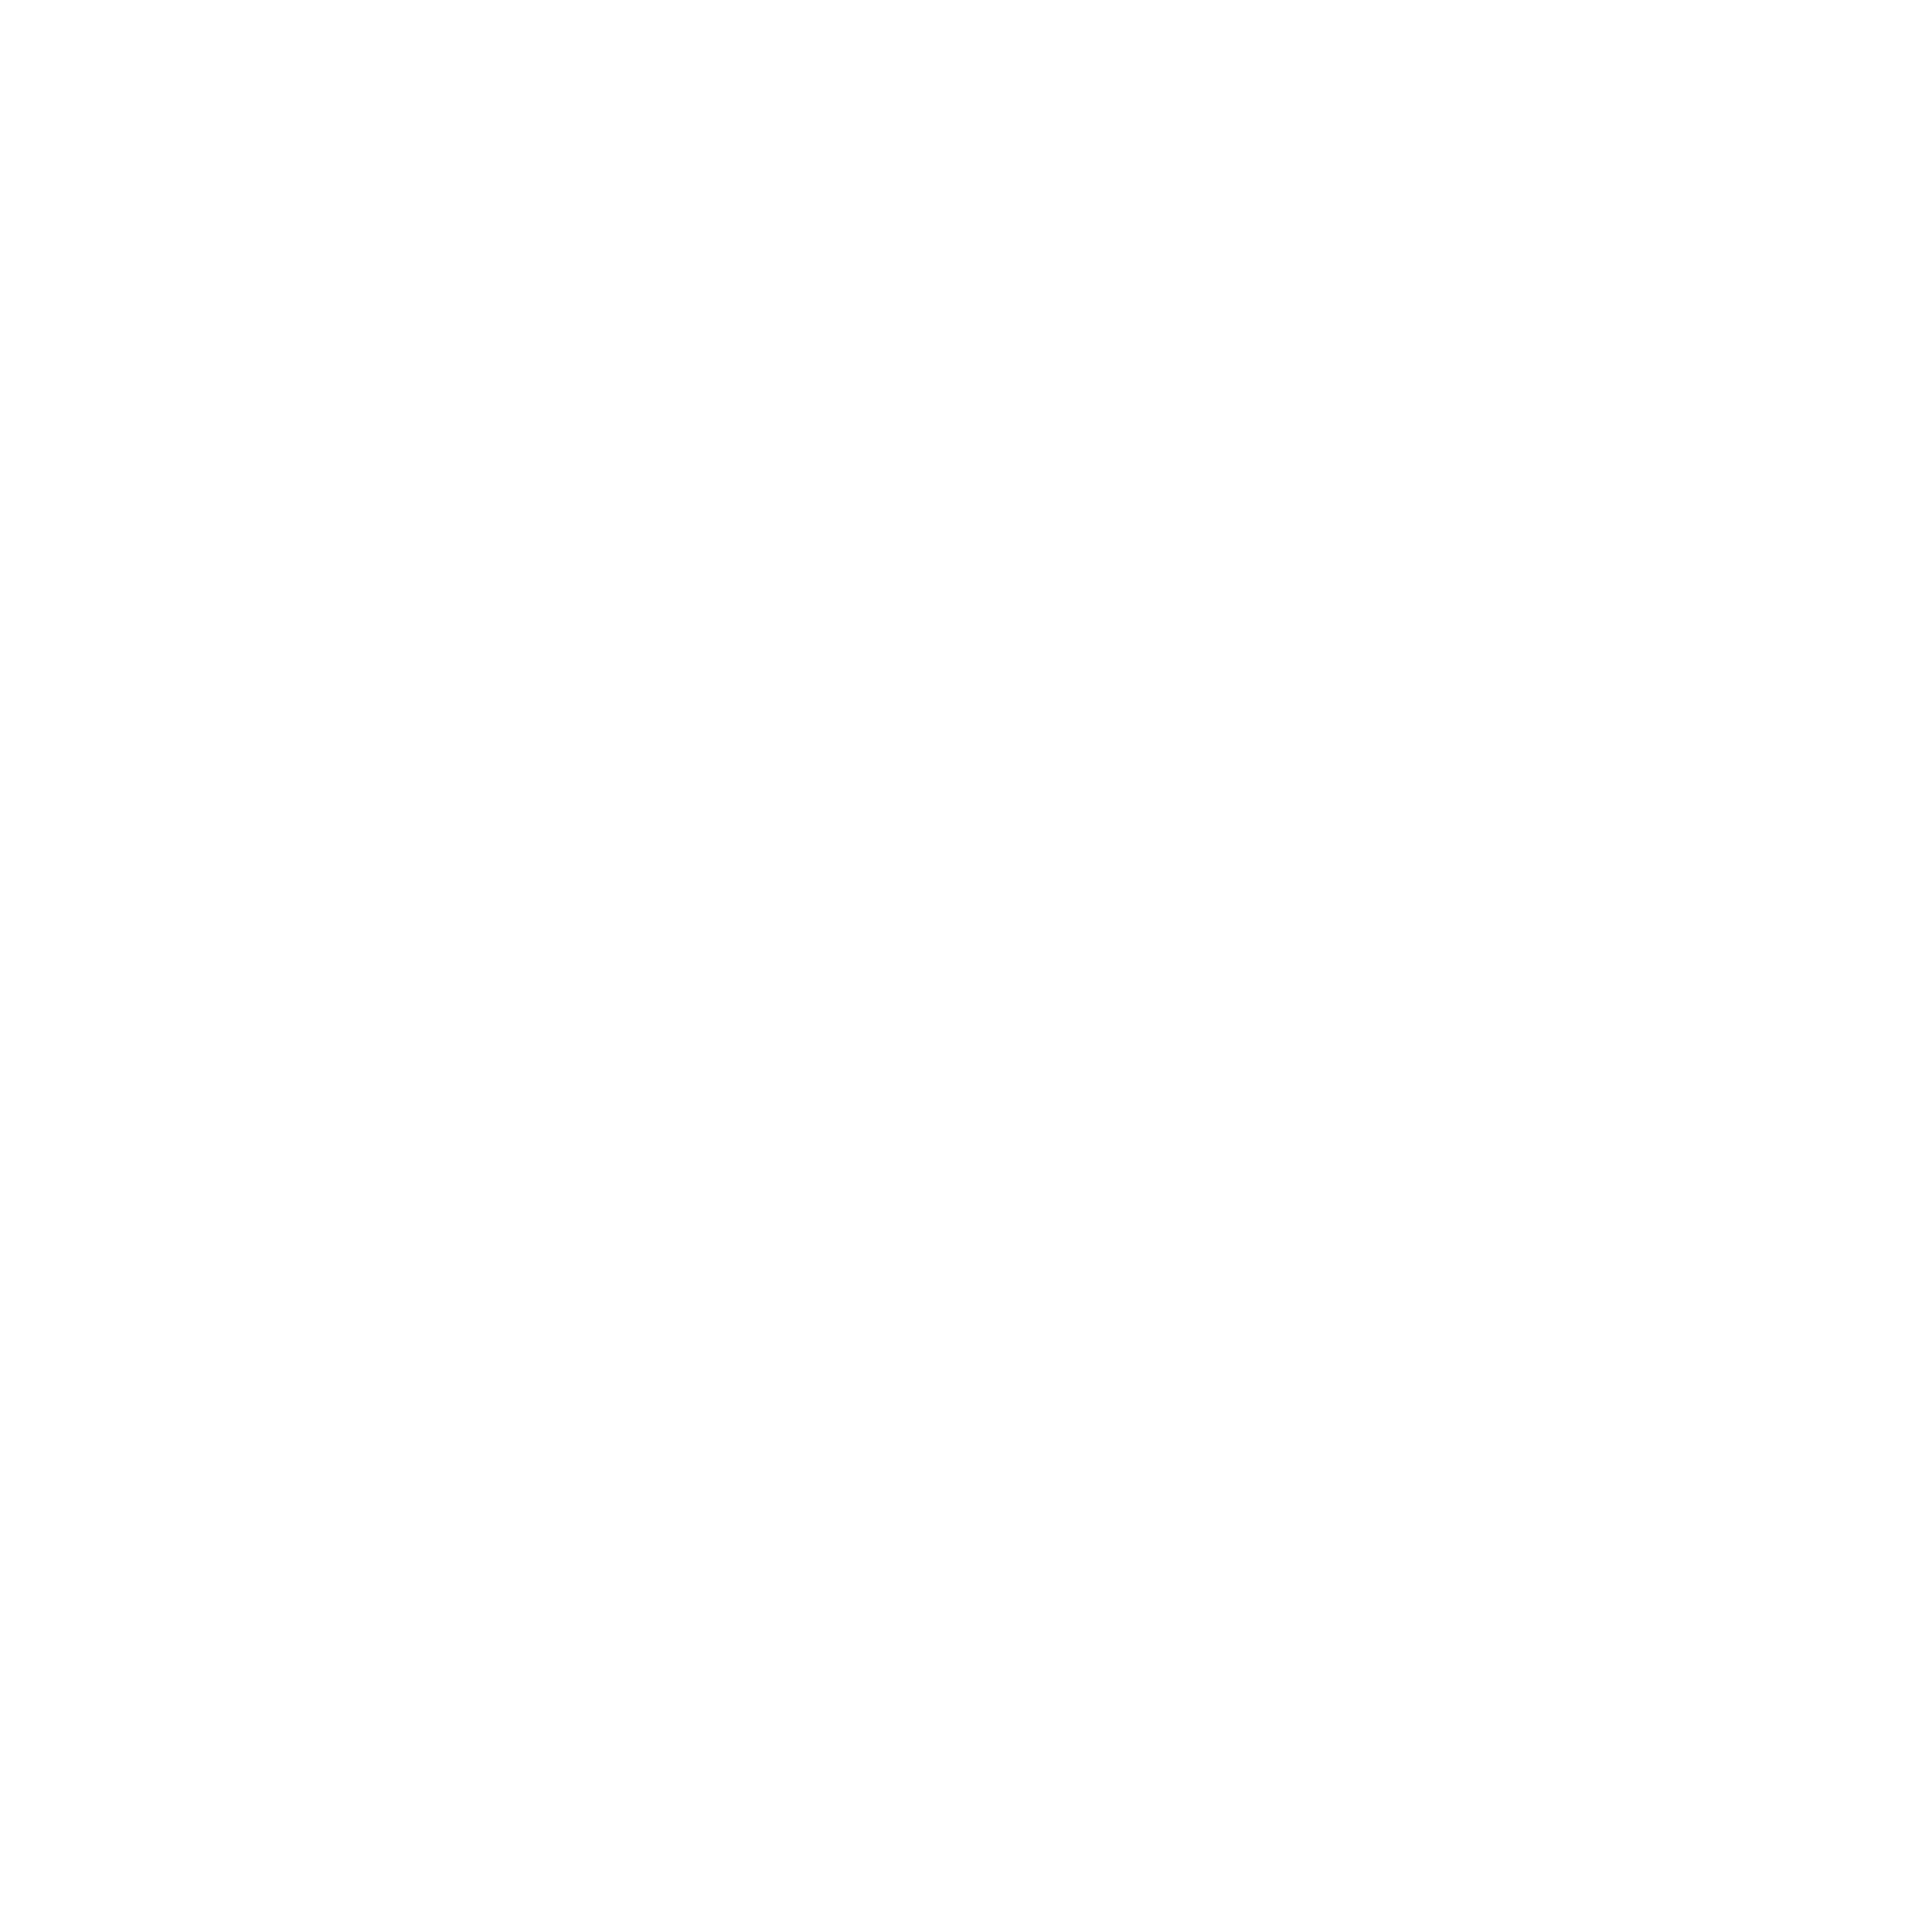 Reybanpac